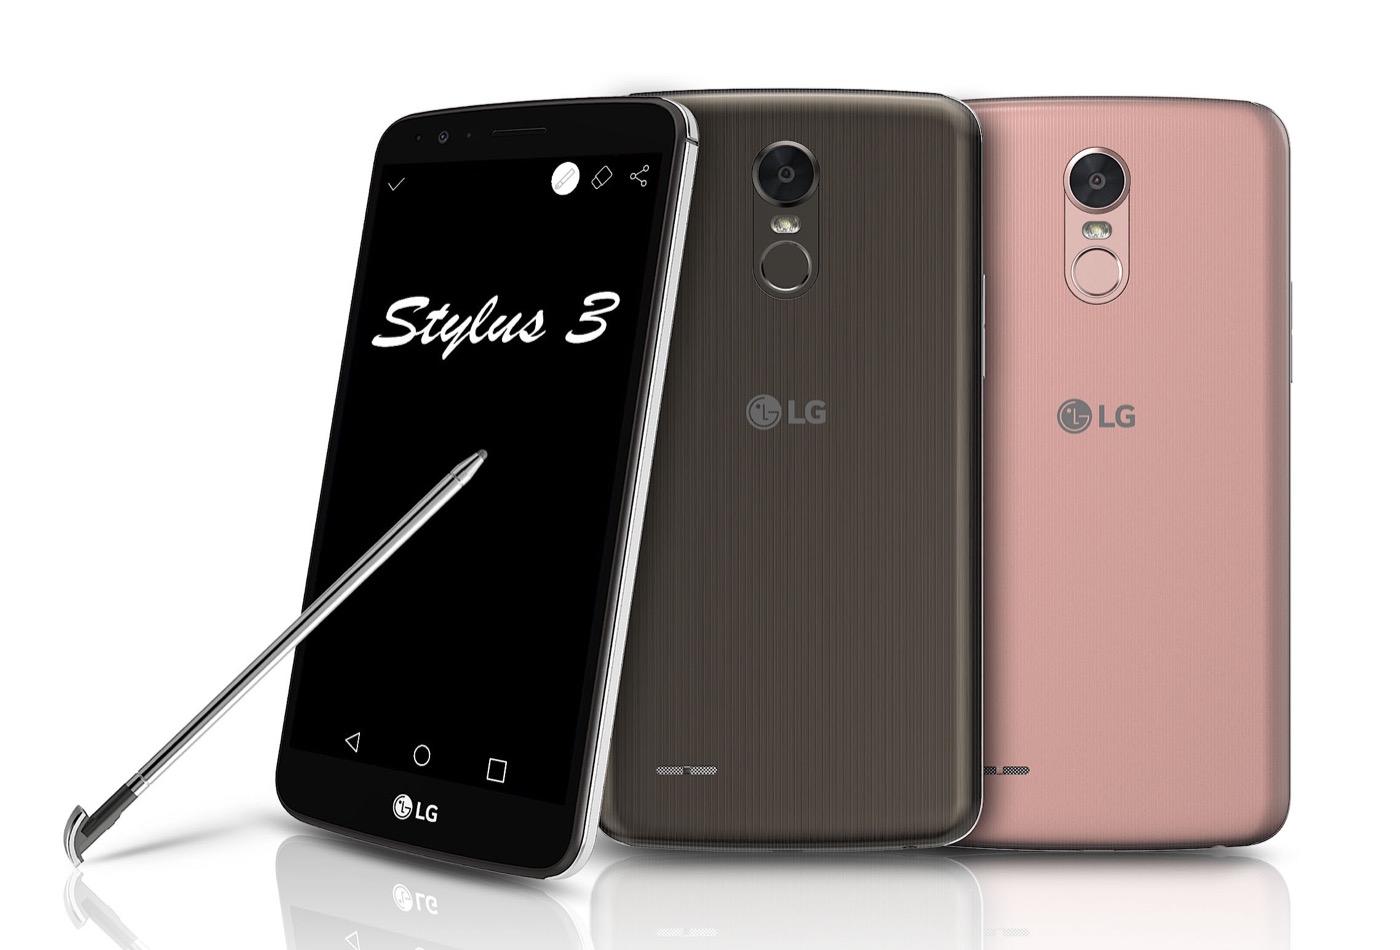 LG Stylus 3